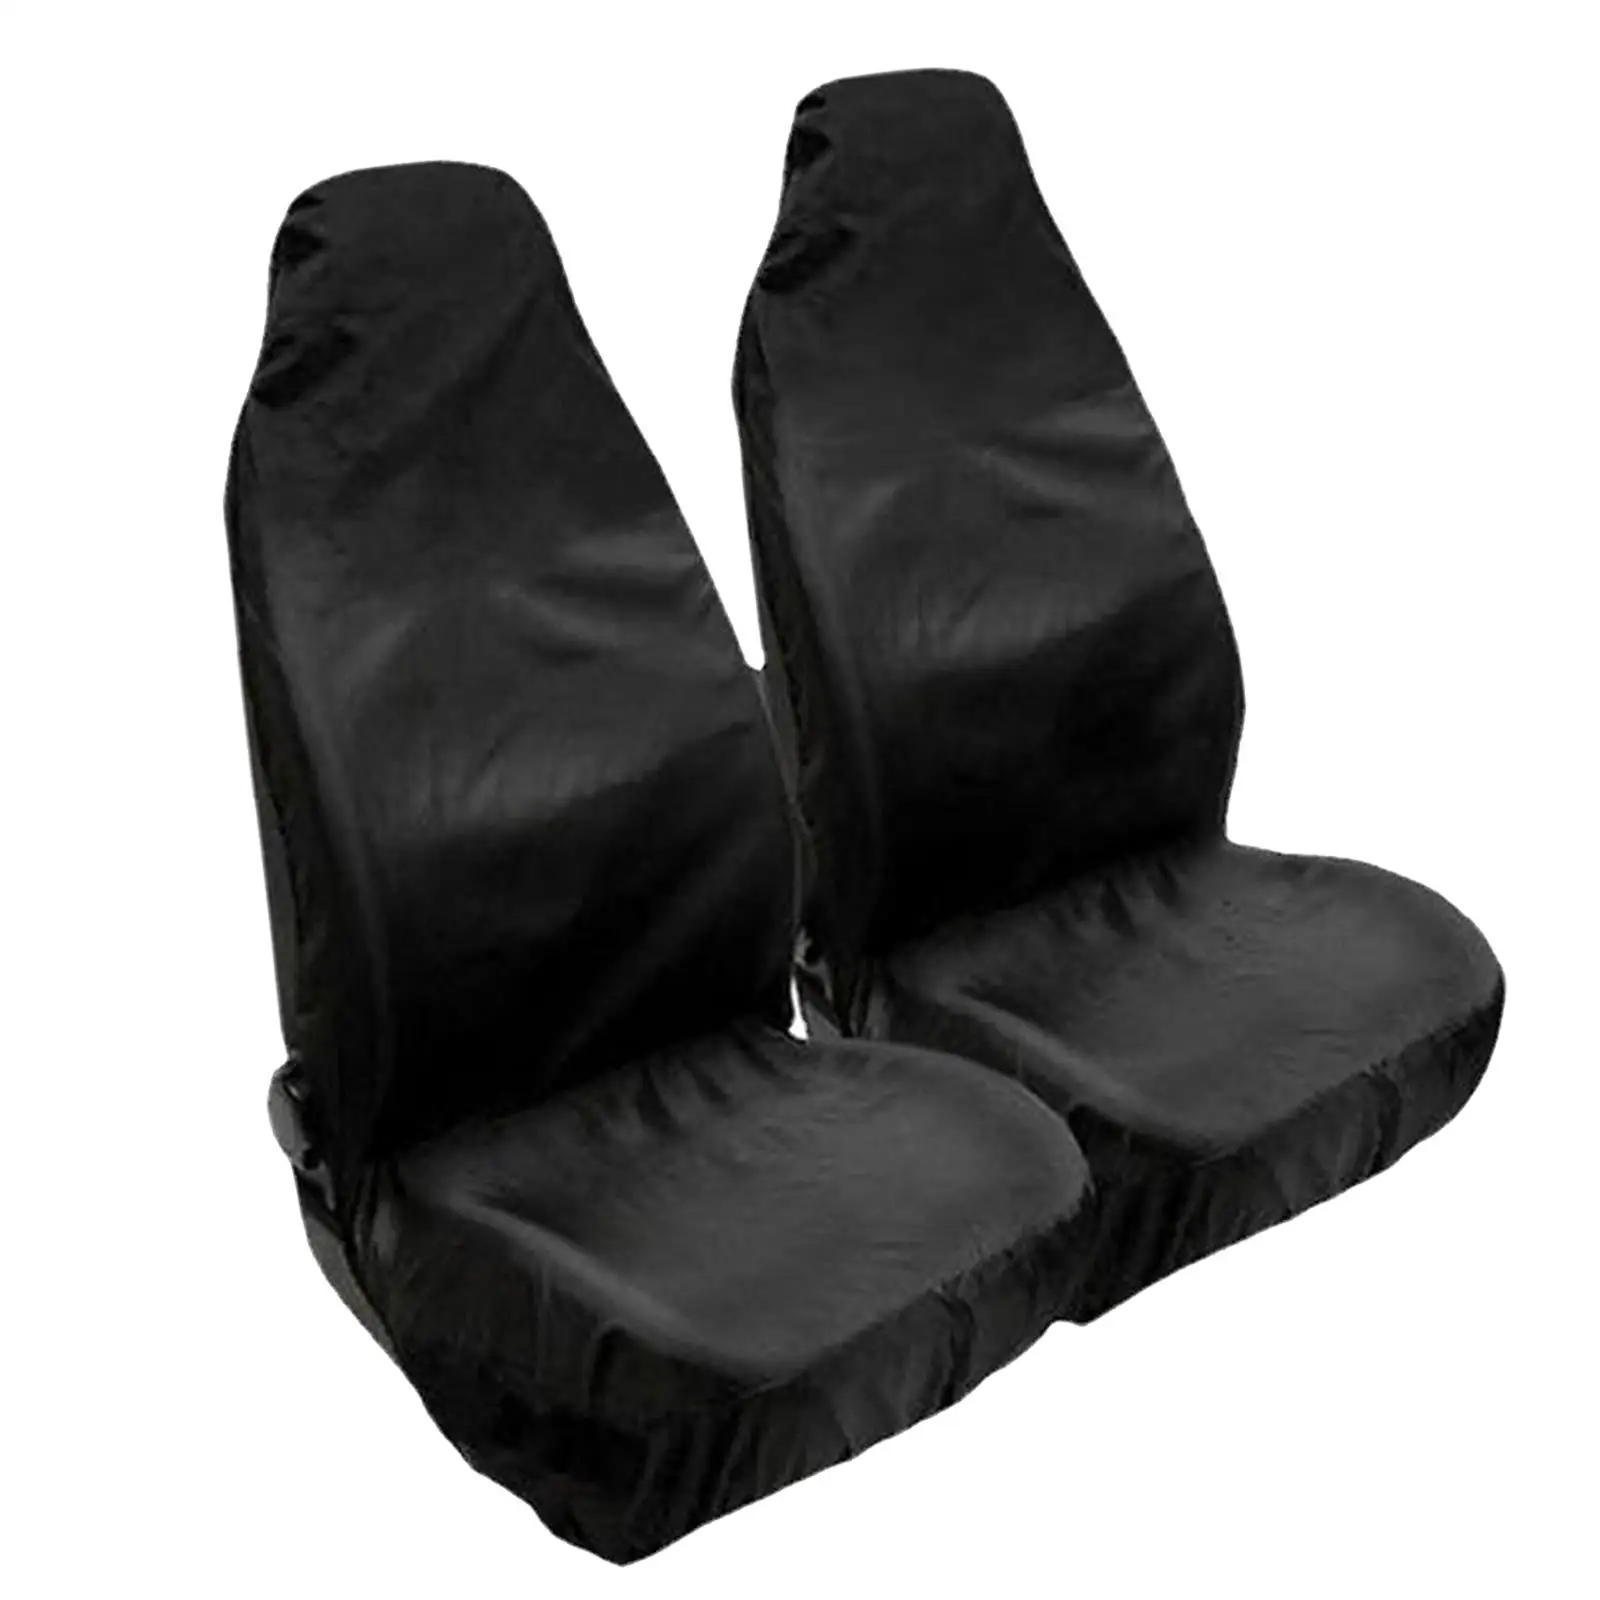 2x אוטומטי כיסוי מושב סט כרית מושב מכסים עם שקית אחסון Dustproof קל להגנה כיסוי מושב מגן עבור רכב שטח - 1